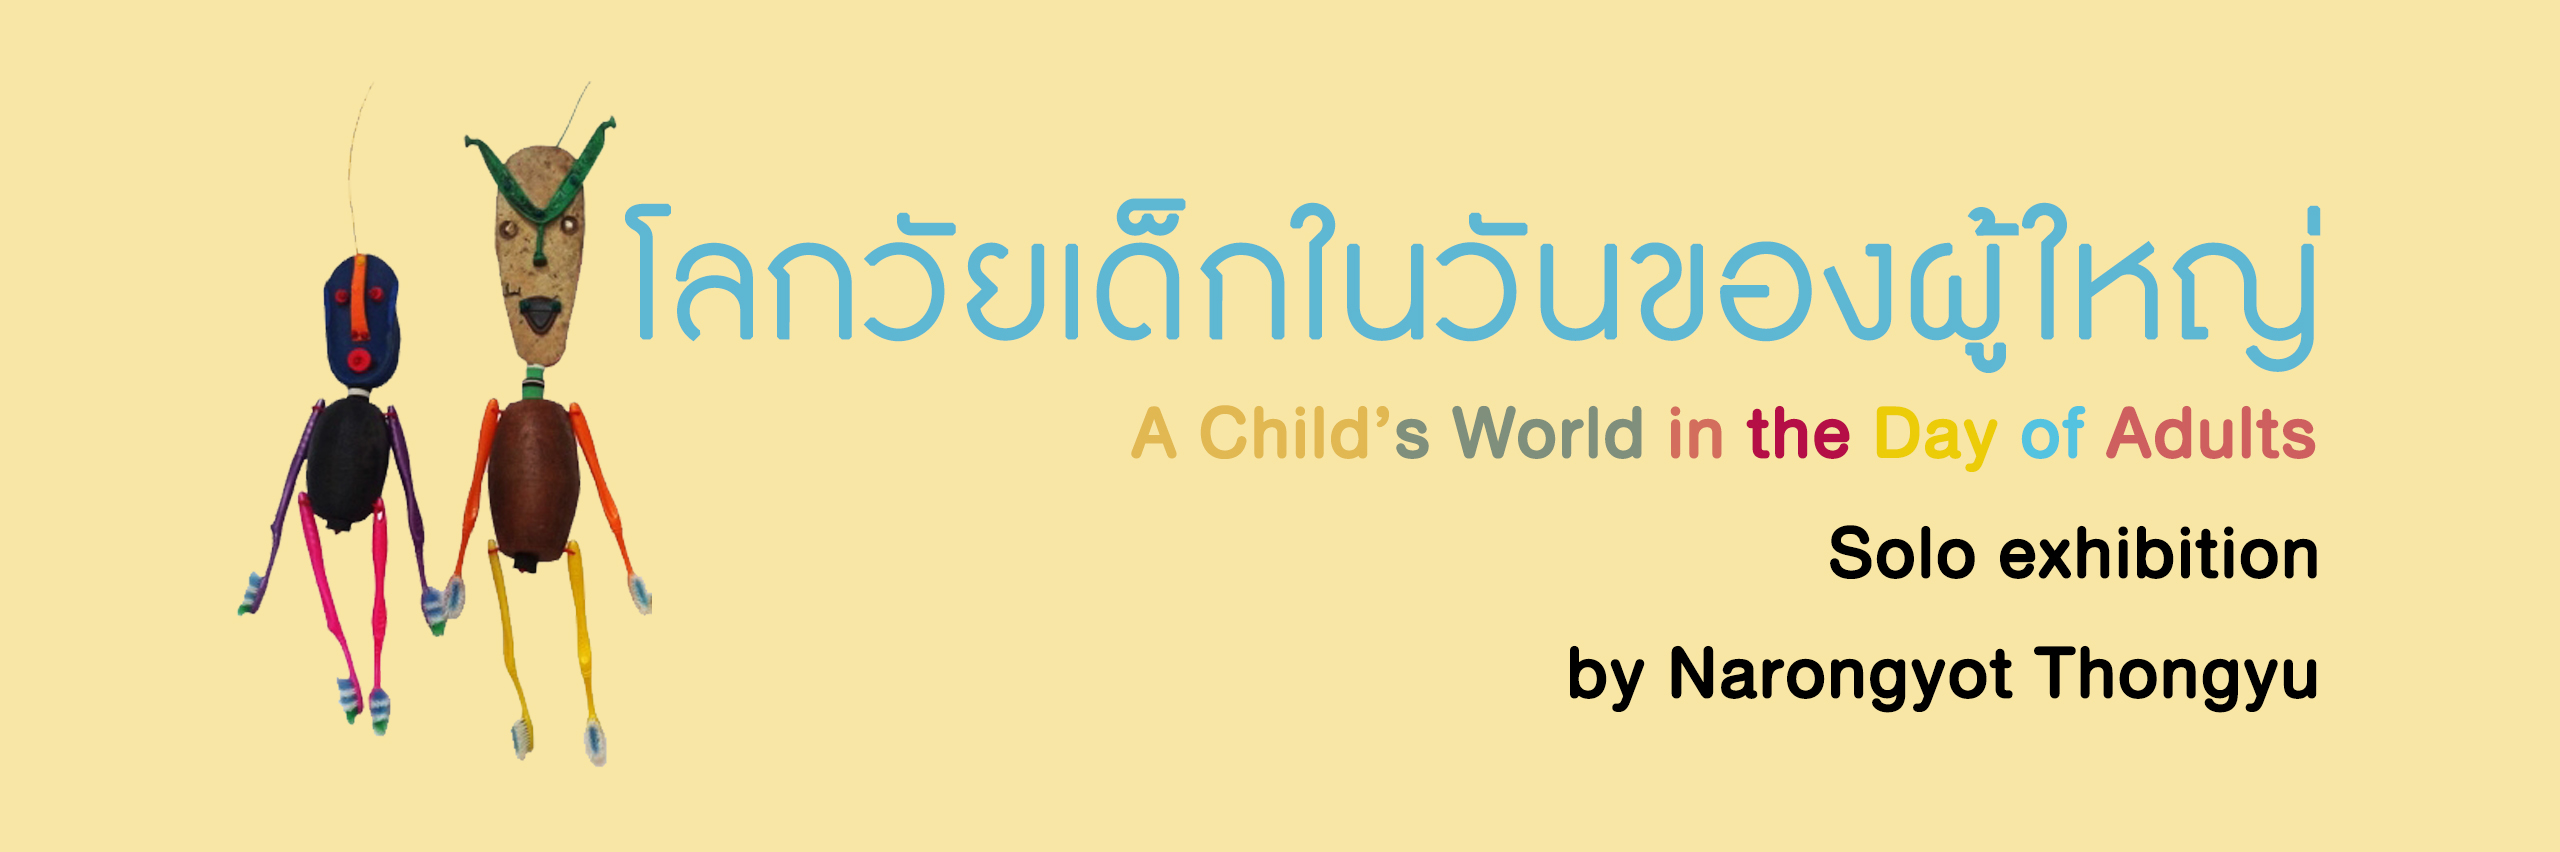 Exhibition A Child's World in the Days of Adults By Narongyot Thongyu | นิทรรศการ โลกวัยเด็กในวันของผู้ใหญ่ โดย ณรงค์ยศ ทองอยู่